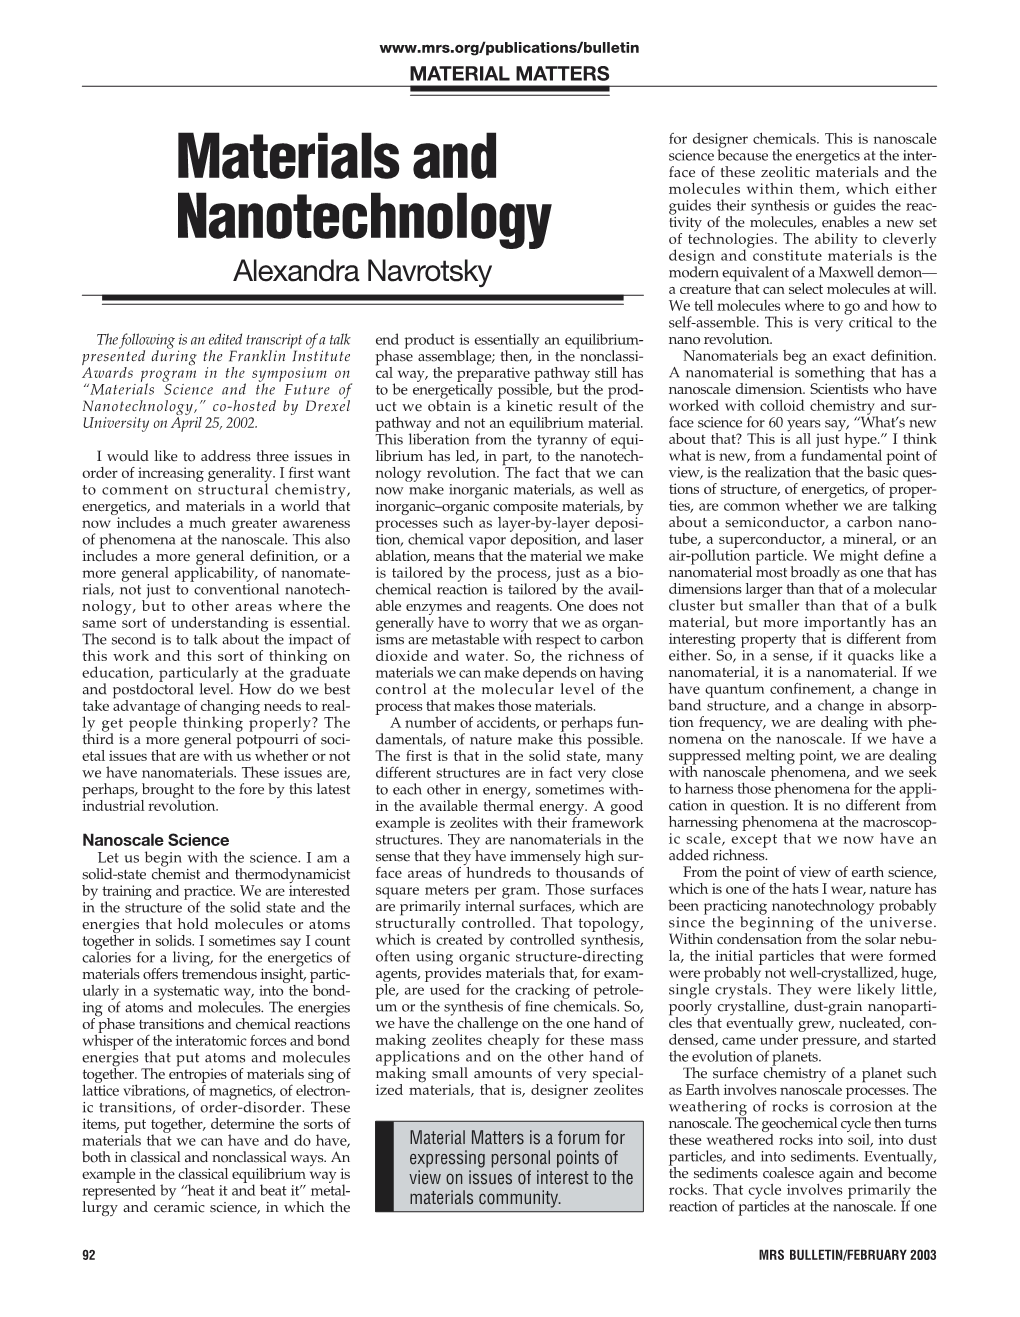 Materials and Nanotechnology